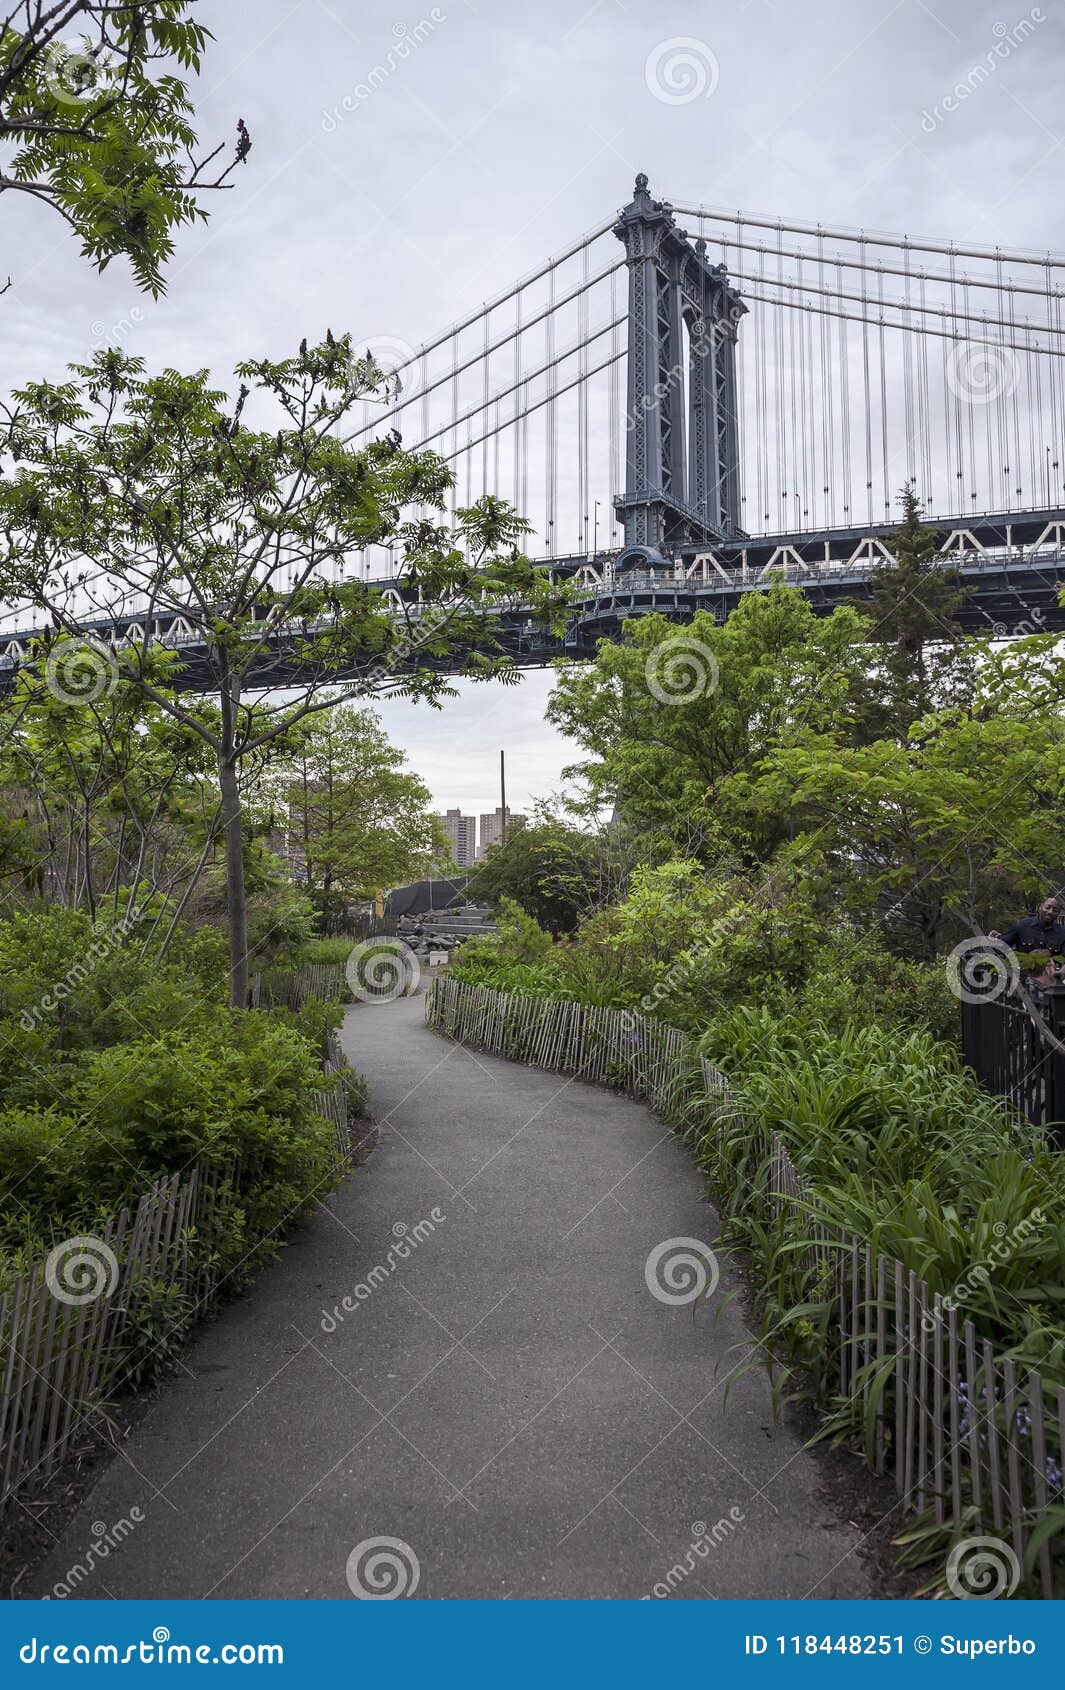 New York City Manhattan Bridge Stock Image - Image of path, exterior ...